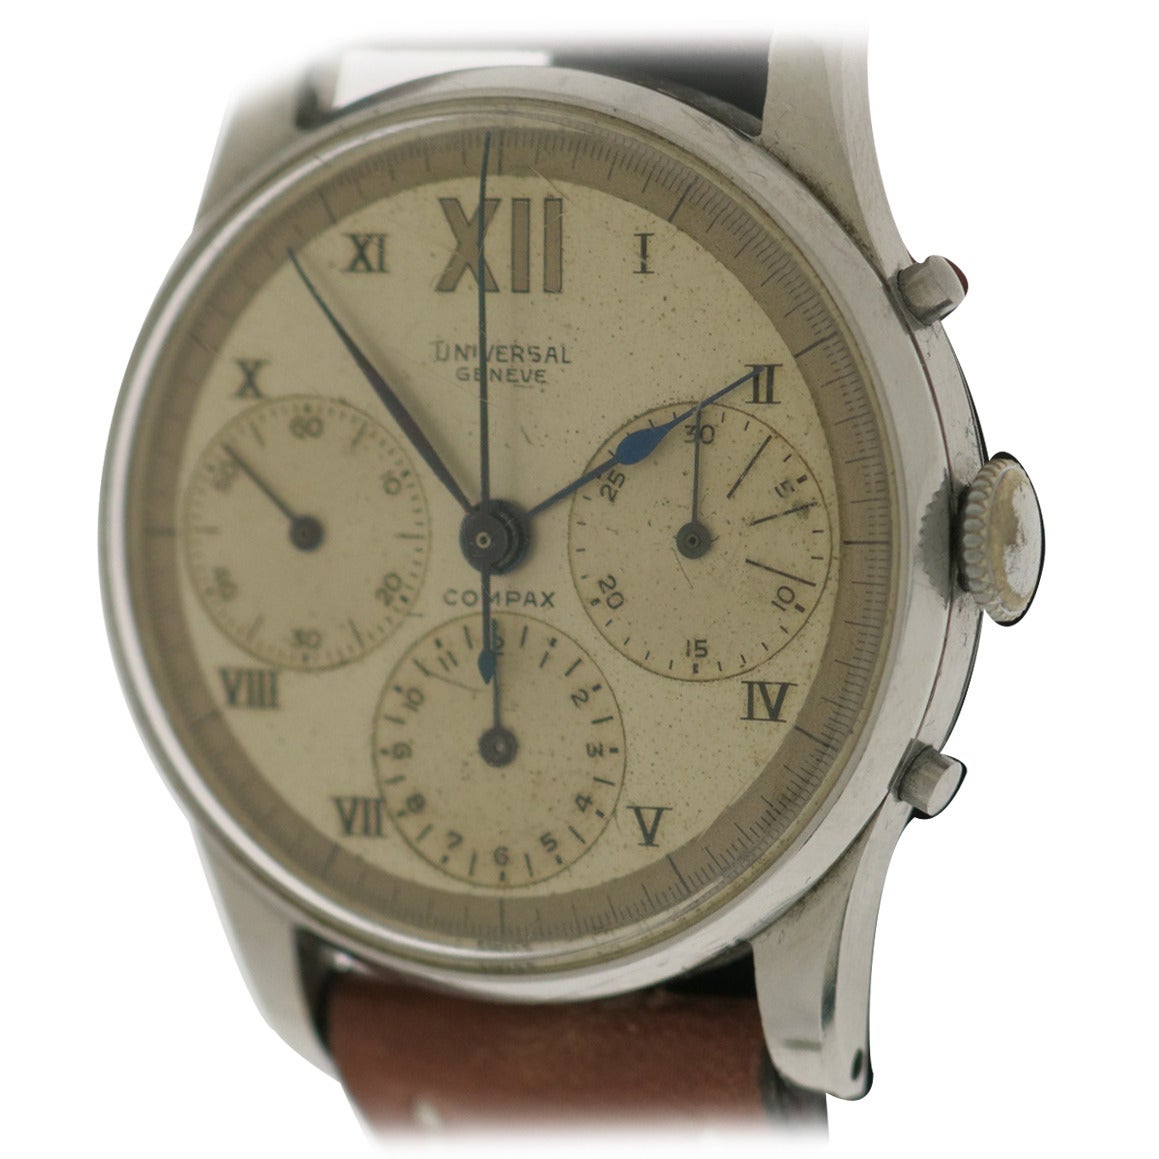 Universal Geneve Stainless Steel Chronograph Wristwatch